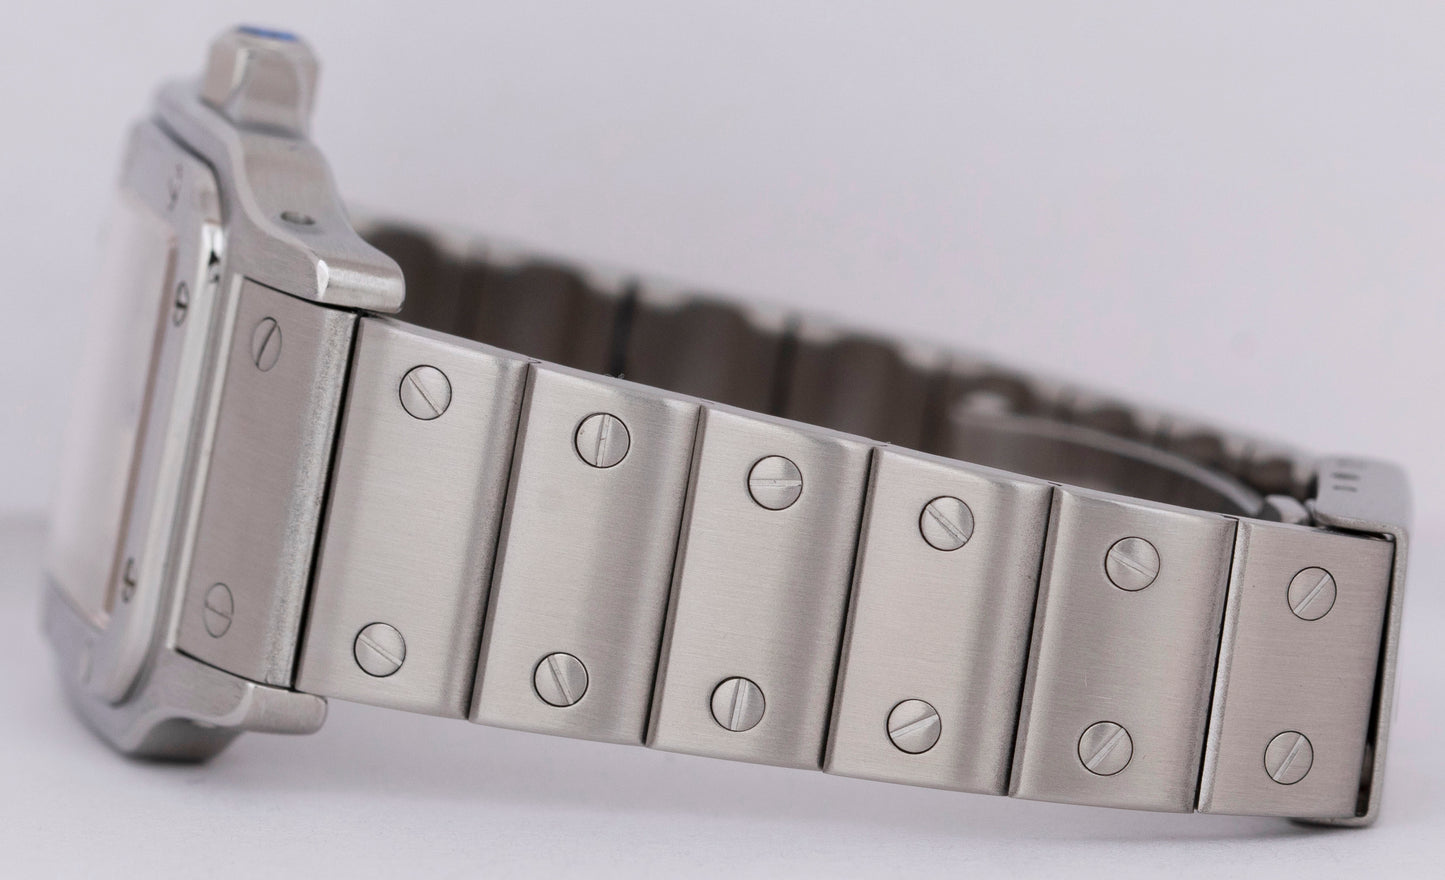 Ladies Cartier Santos Galbee 24mm Ivory Roman Stainless Steel Watch 9057930 BOX